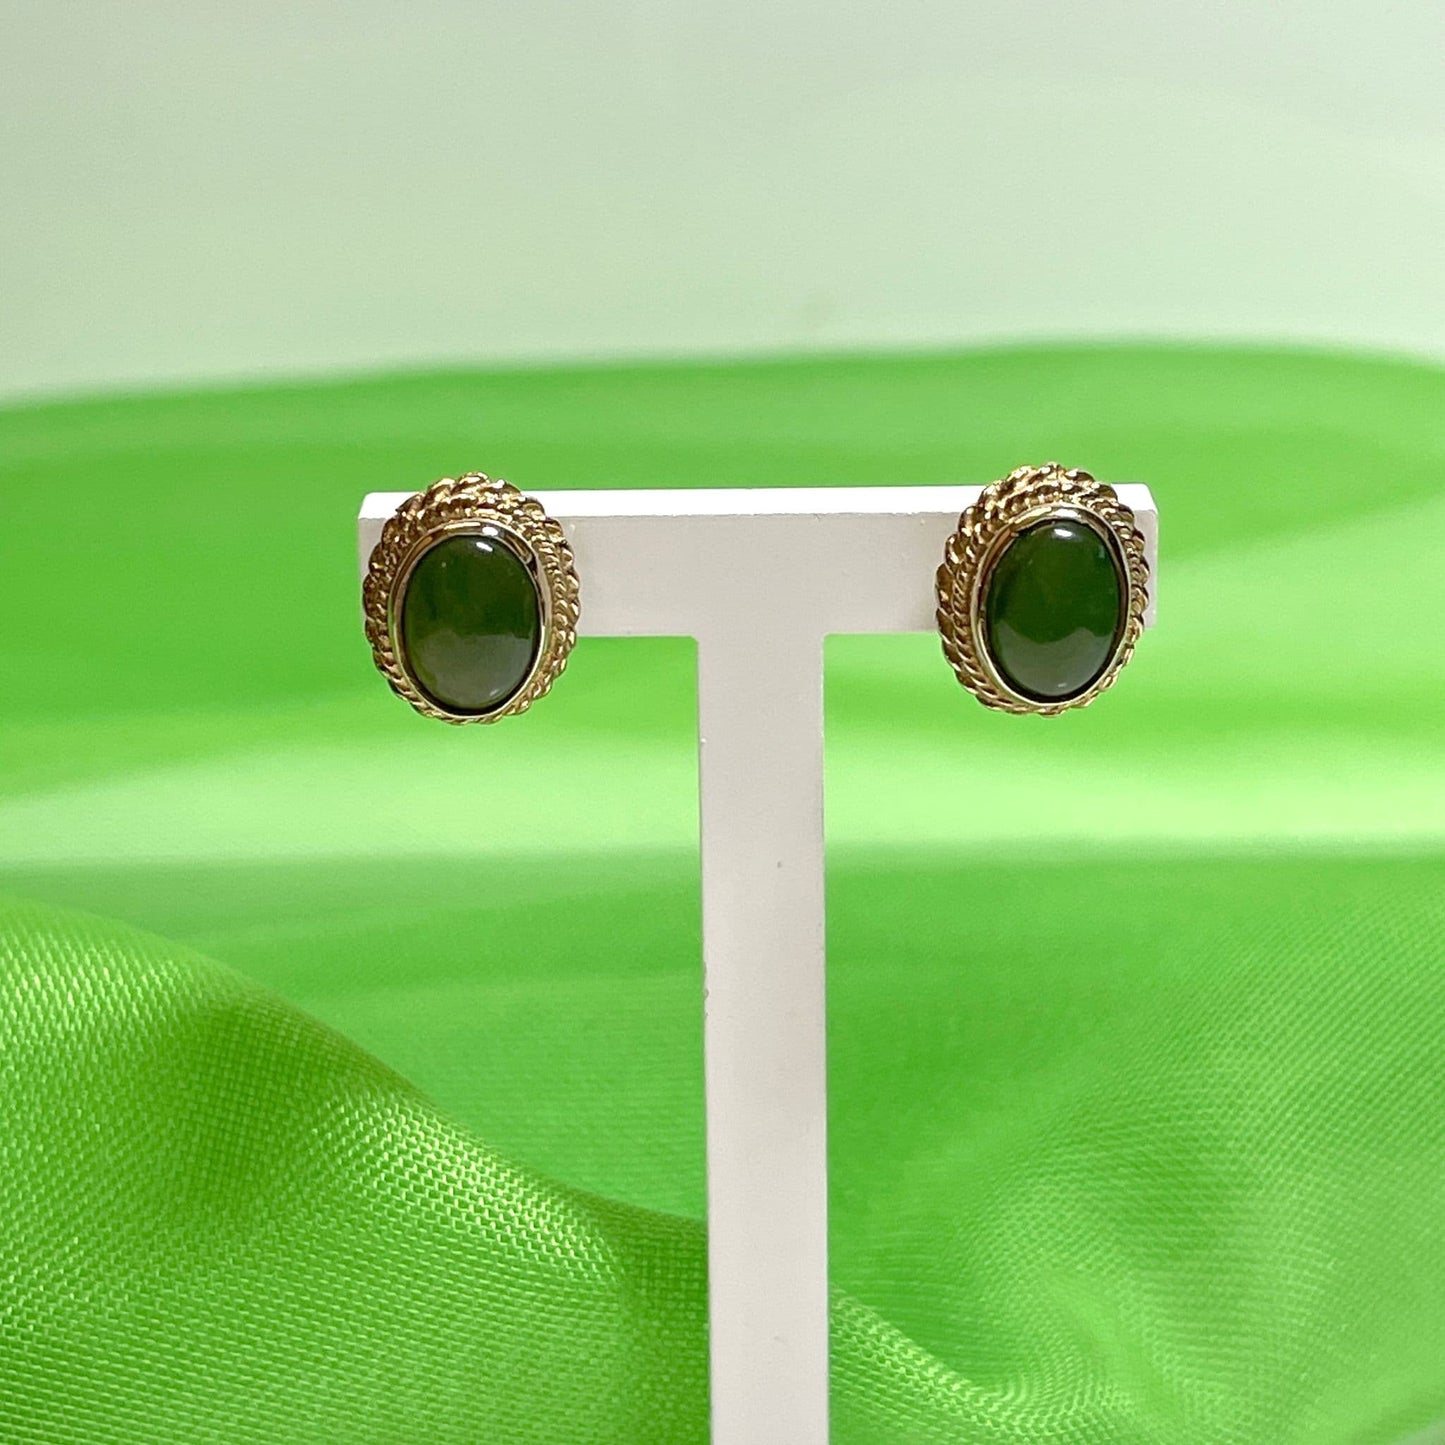 Green jade yellow gold oval earrings